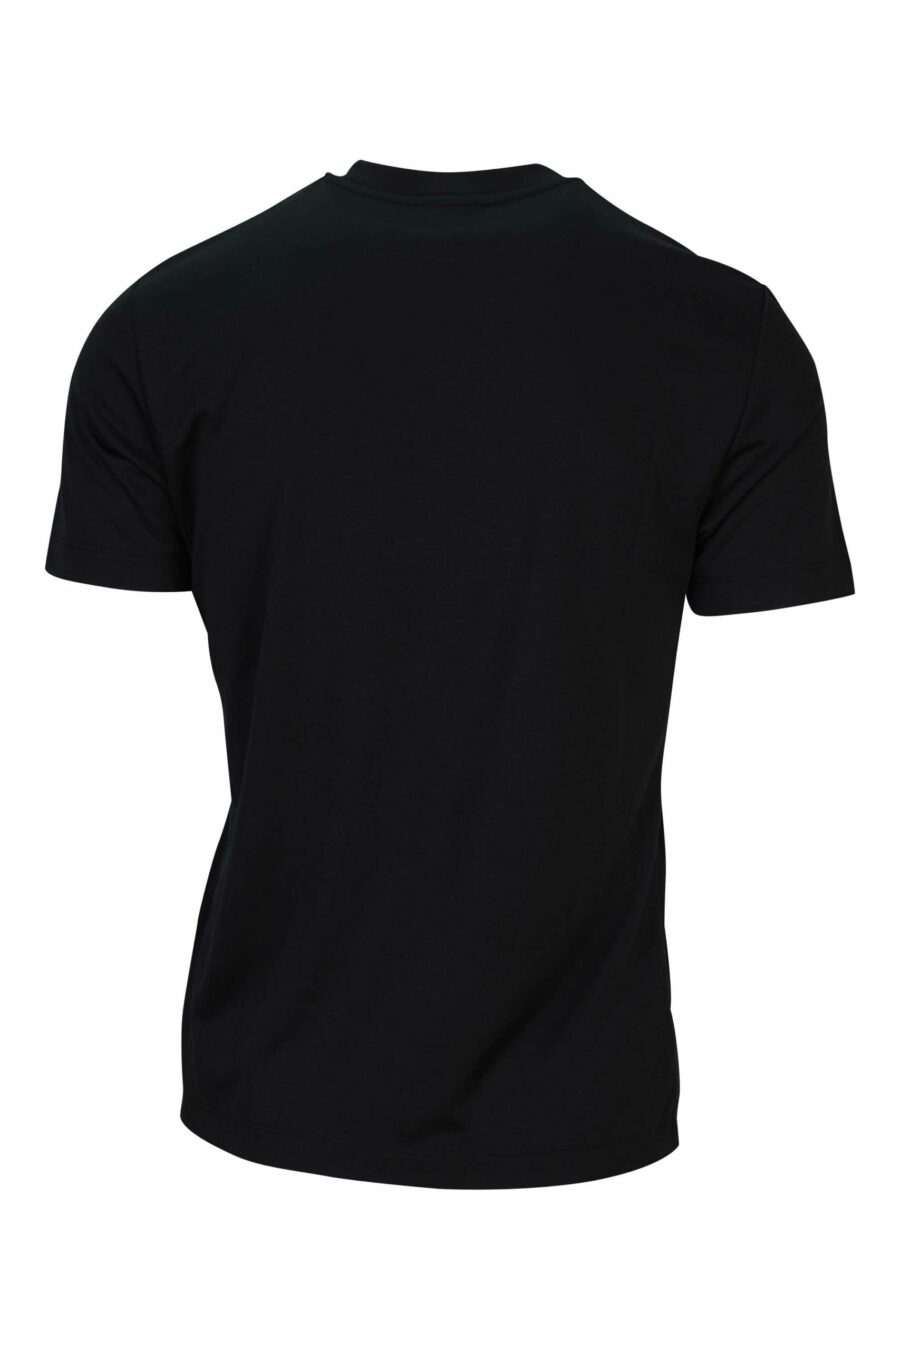 Camiseta negra "oversize" con minilogo "lux identity" blanco en placa negra - 8058947508570 2 scaled